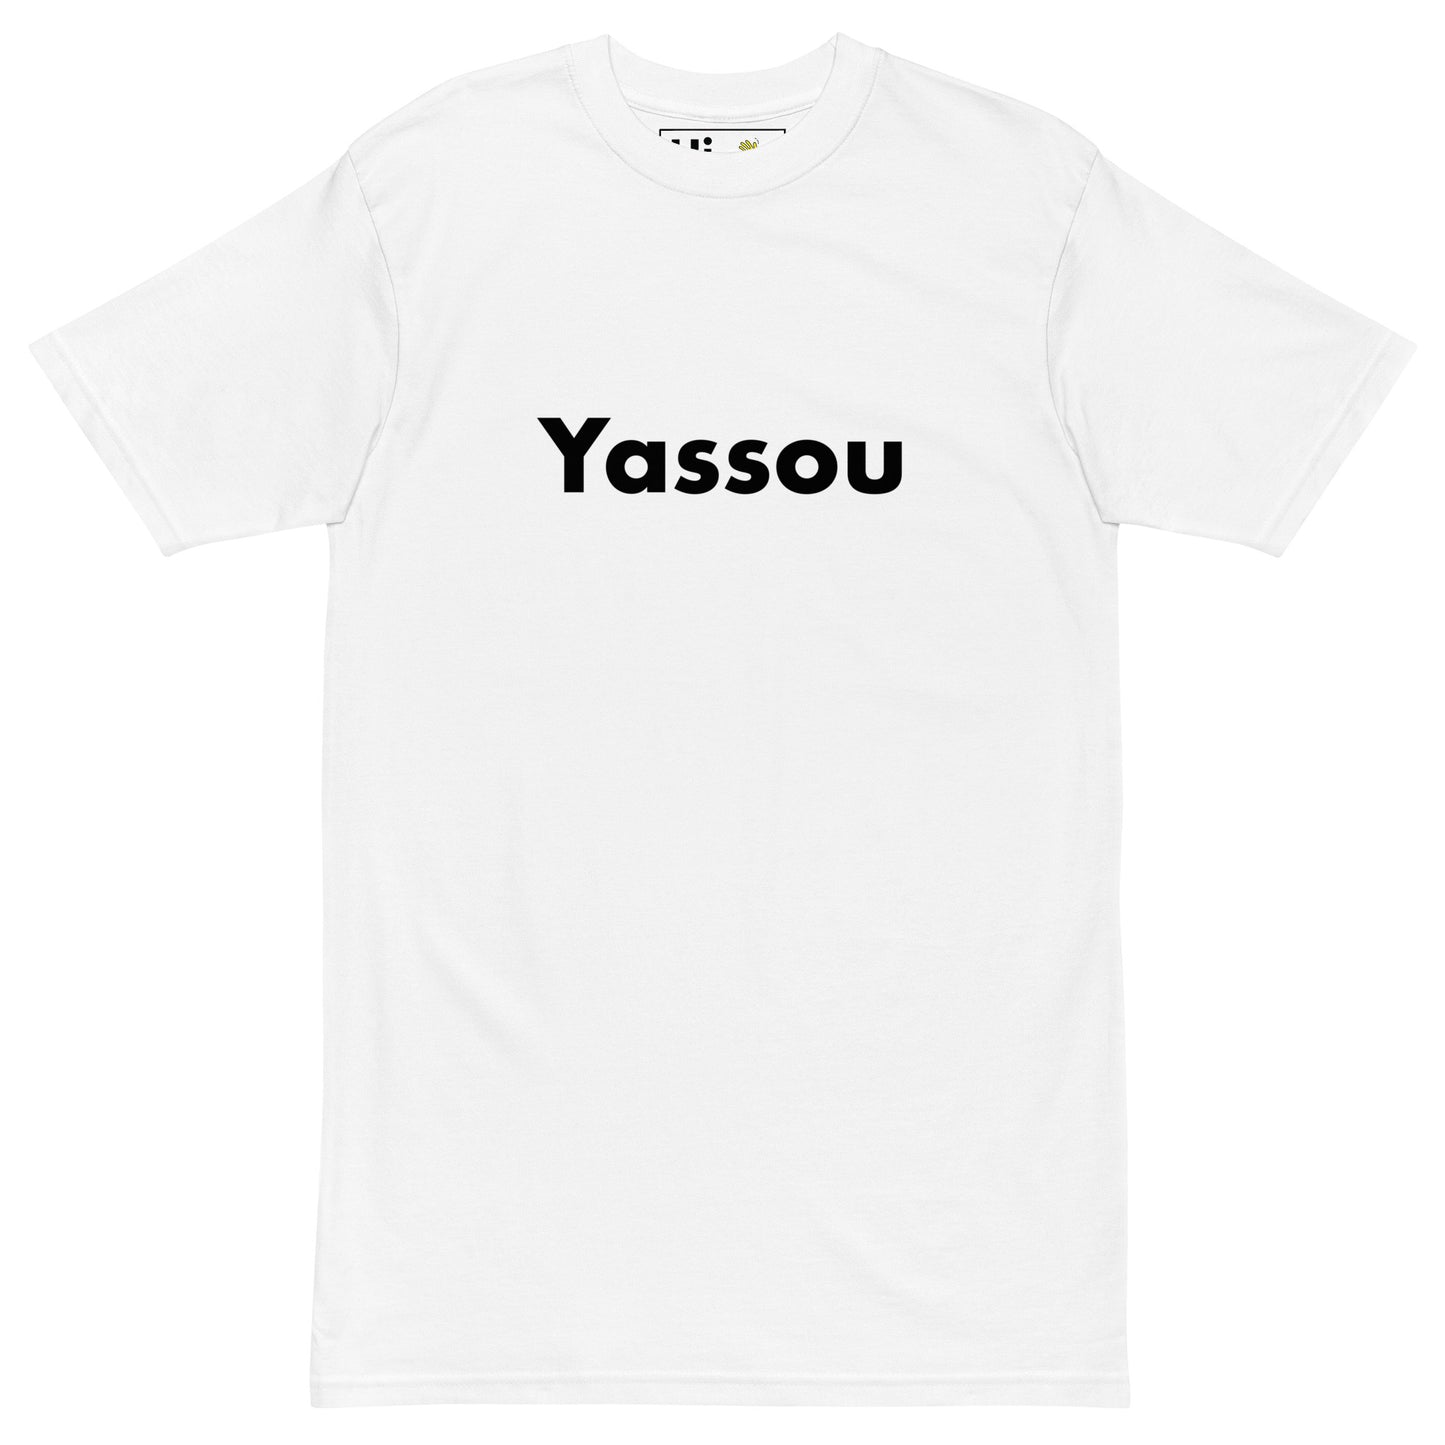 Hi Yassou Greek